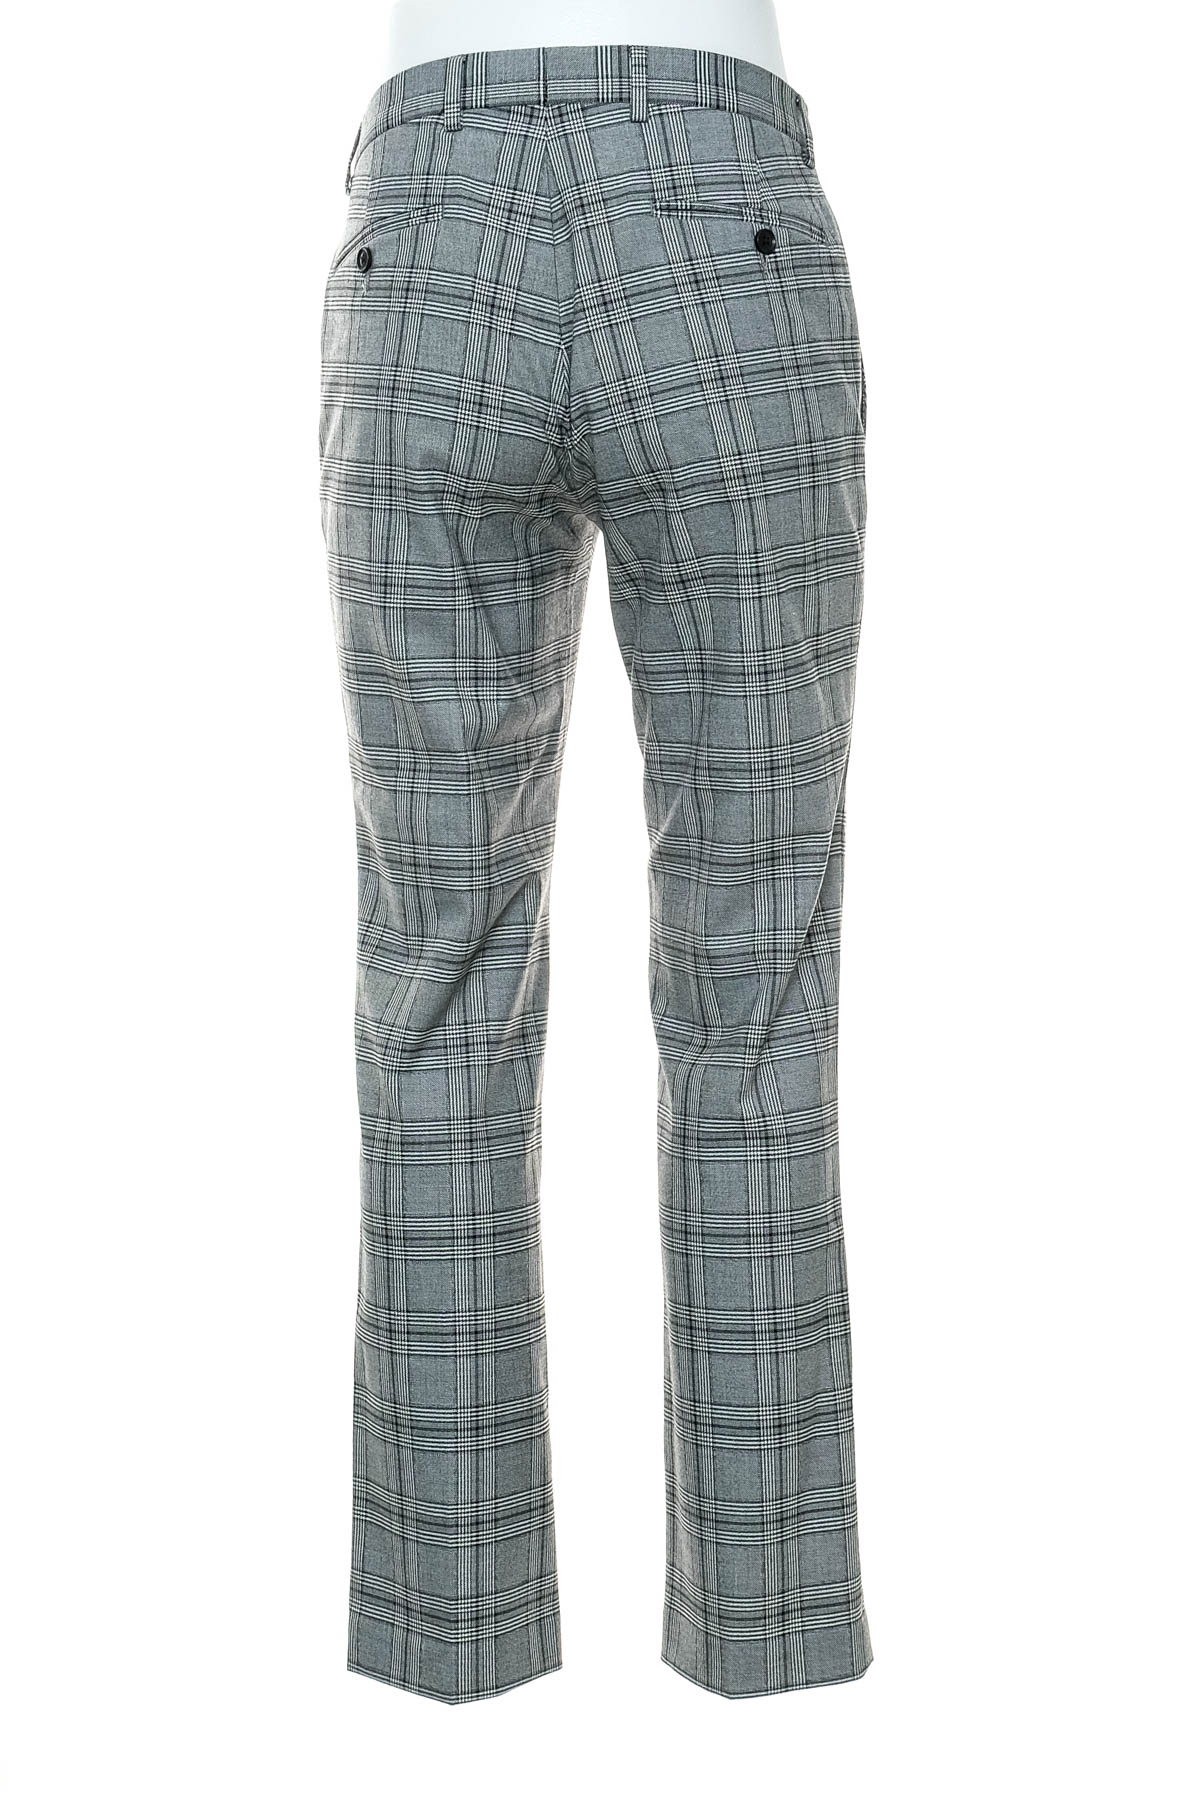 Men's trousers - Alfani - 1